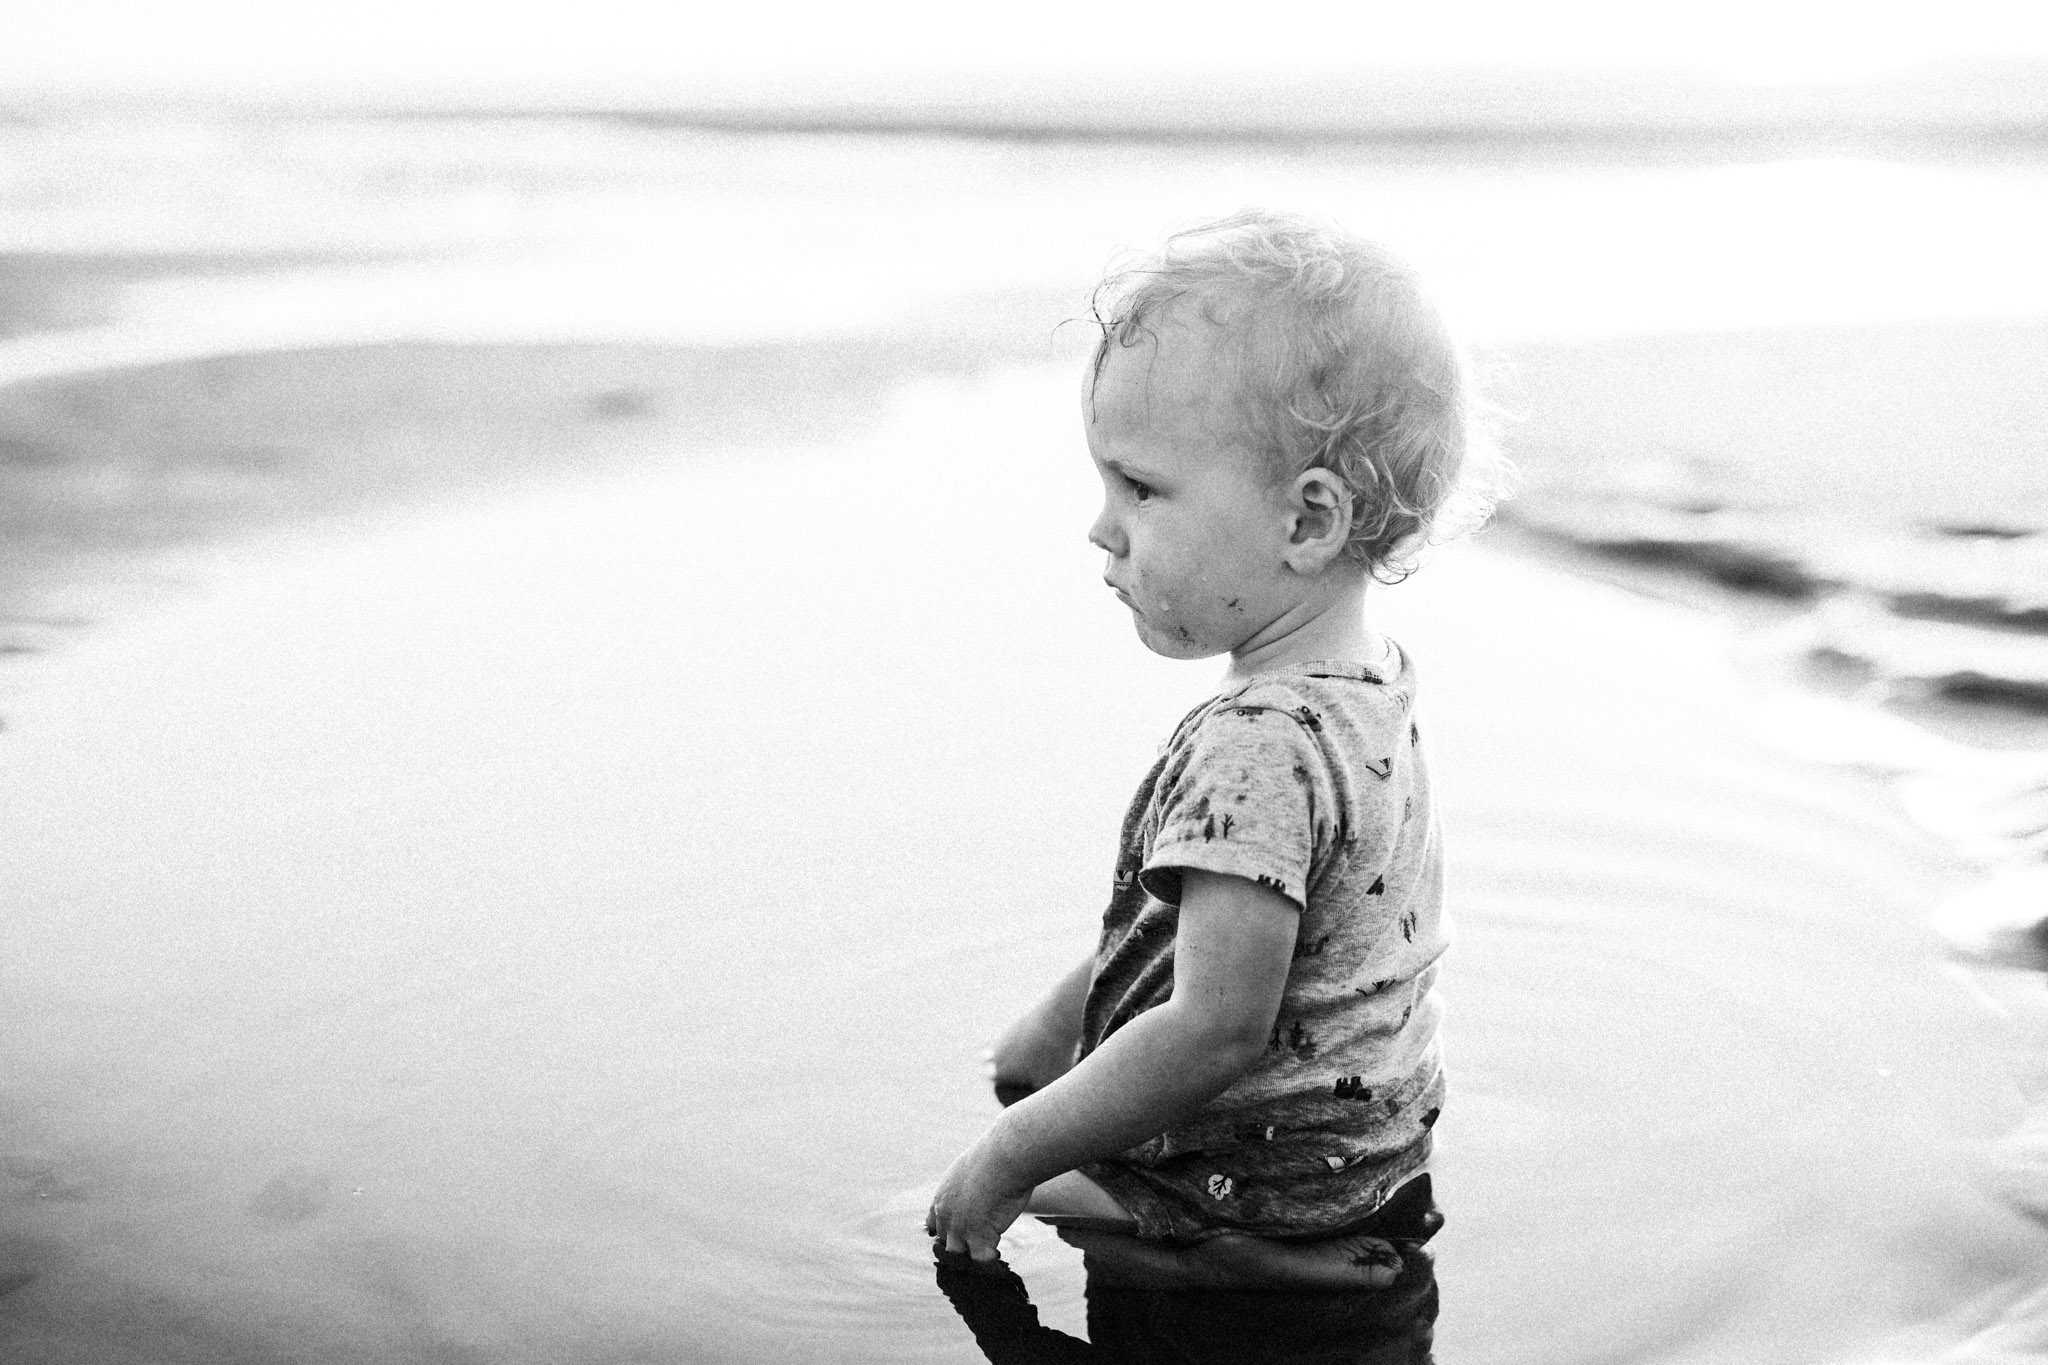 little boy playing in tide pool water at ocean